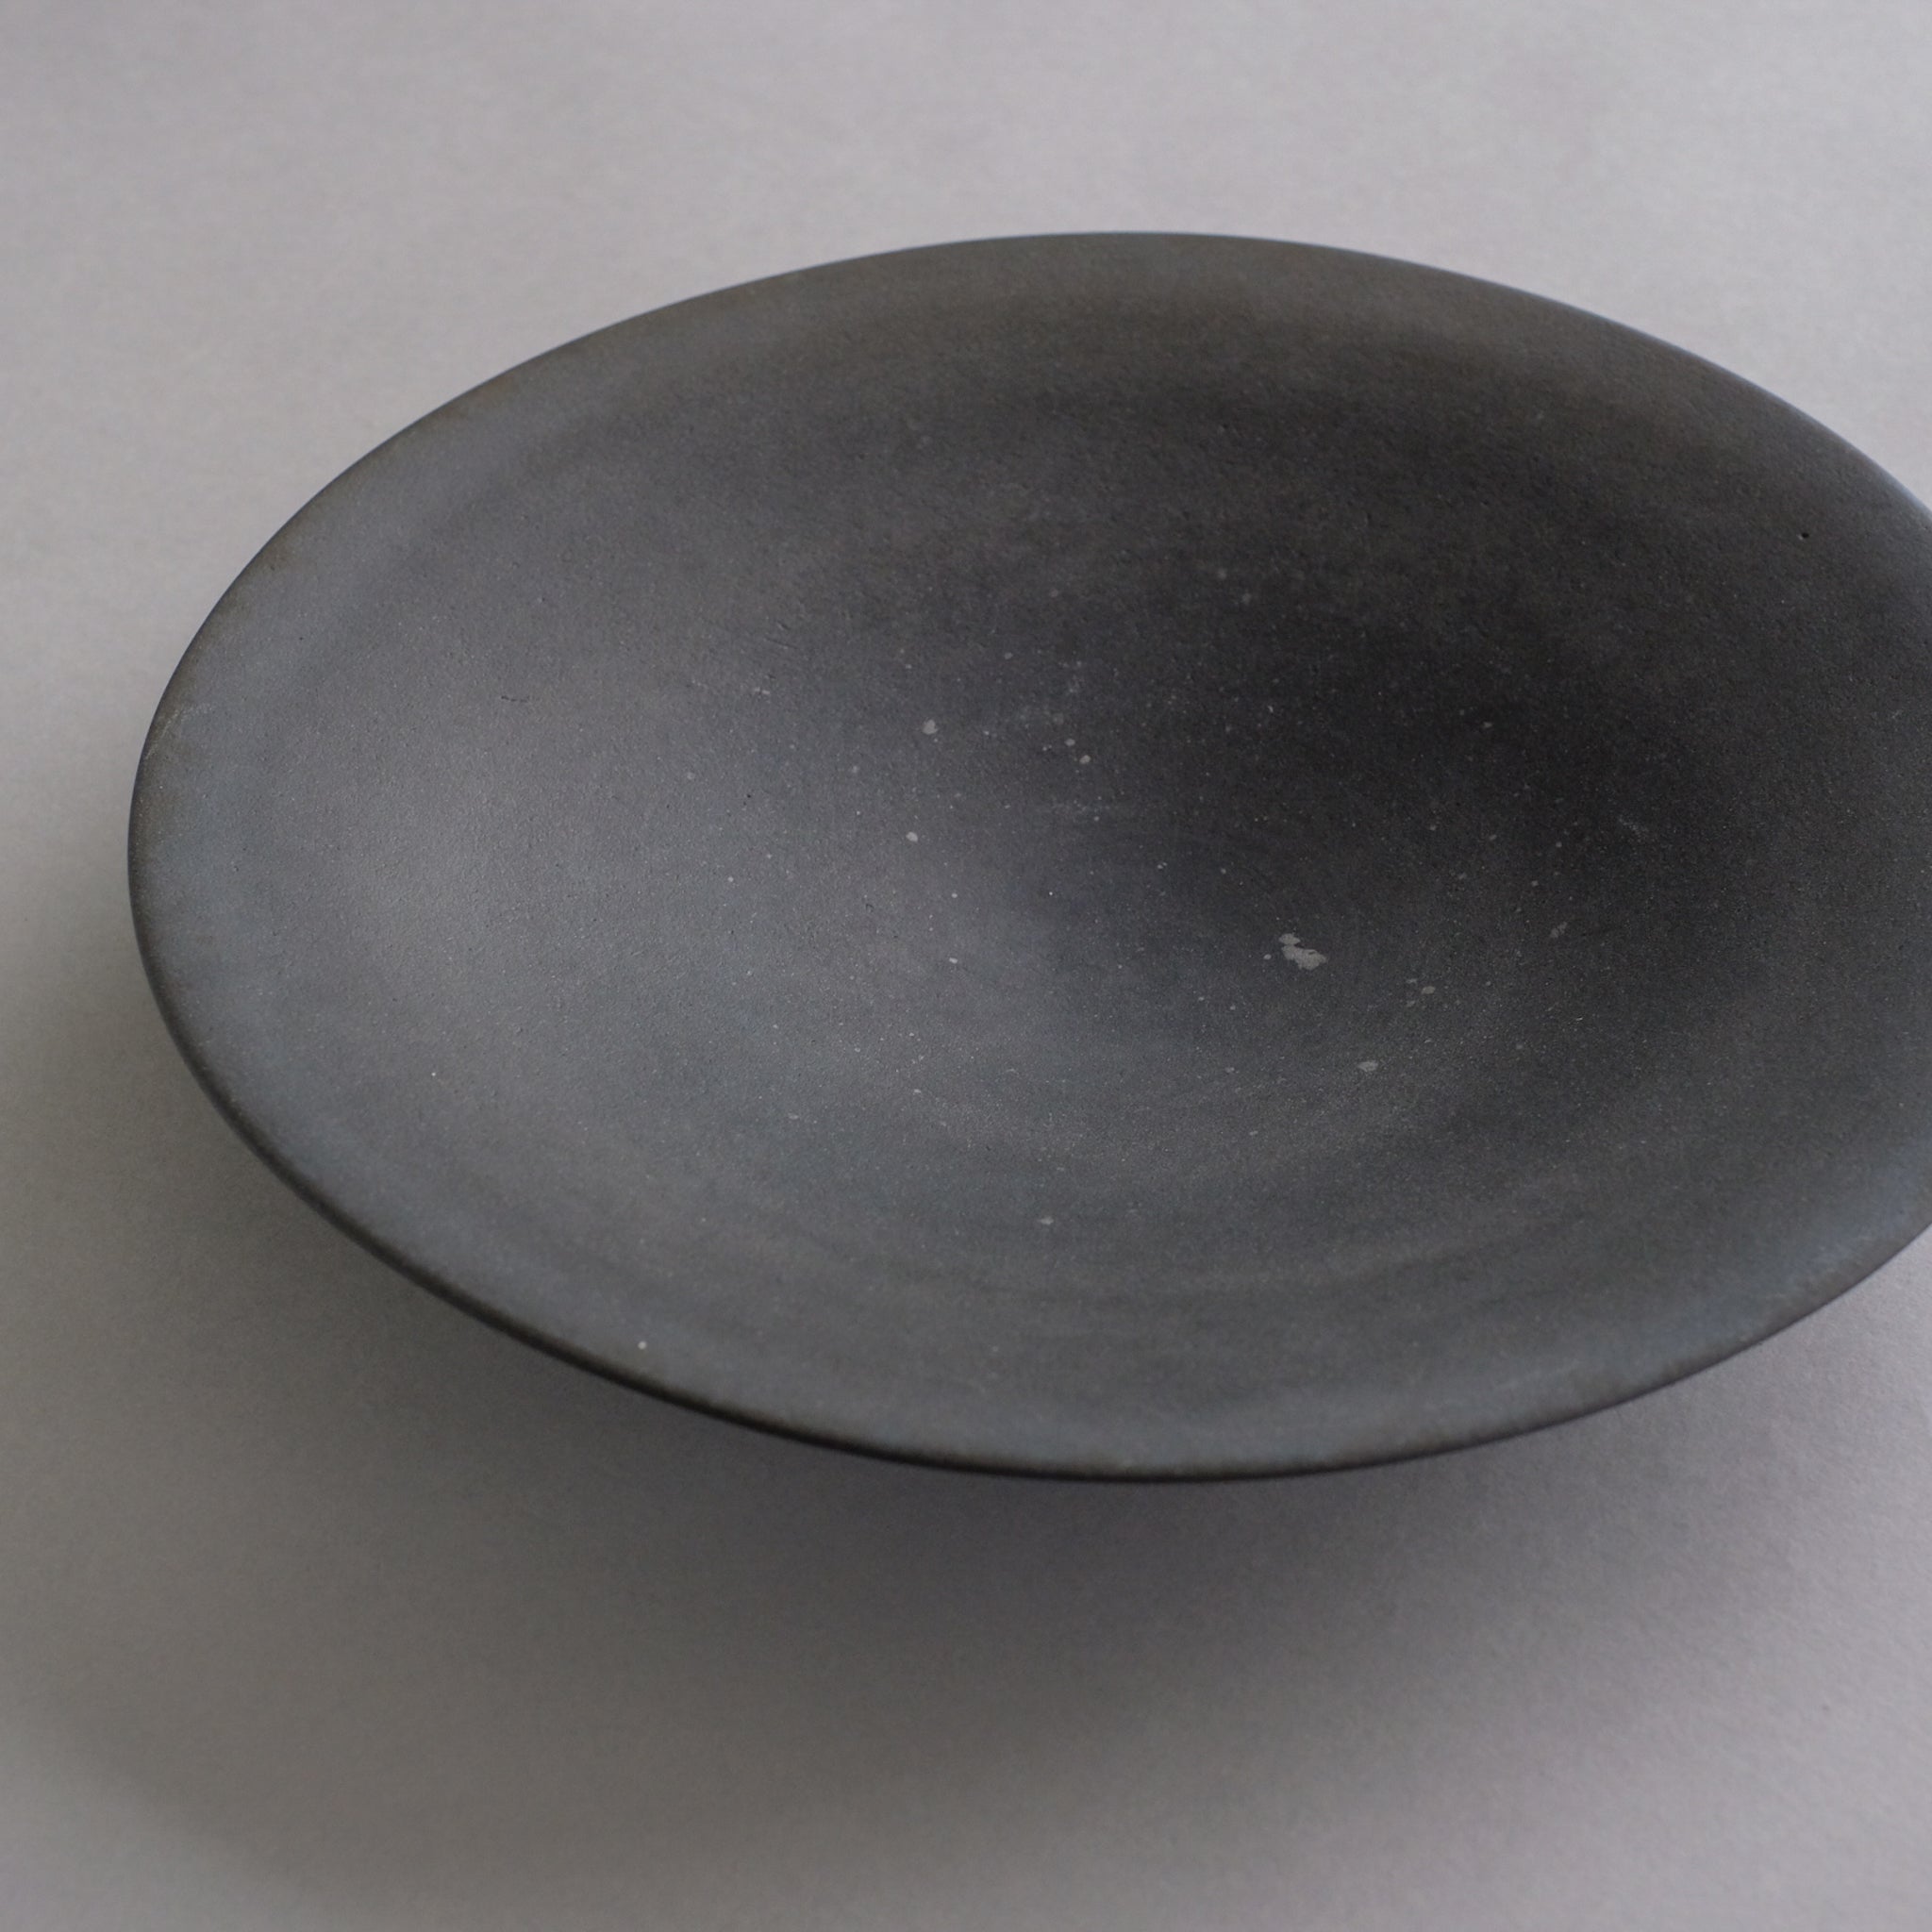 打田翠   炭化焼締 鉢 Lサイズ  Midori Uchida  Carbonization firing bowl L-size (MU23)